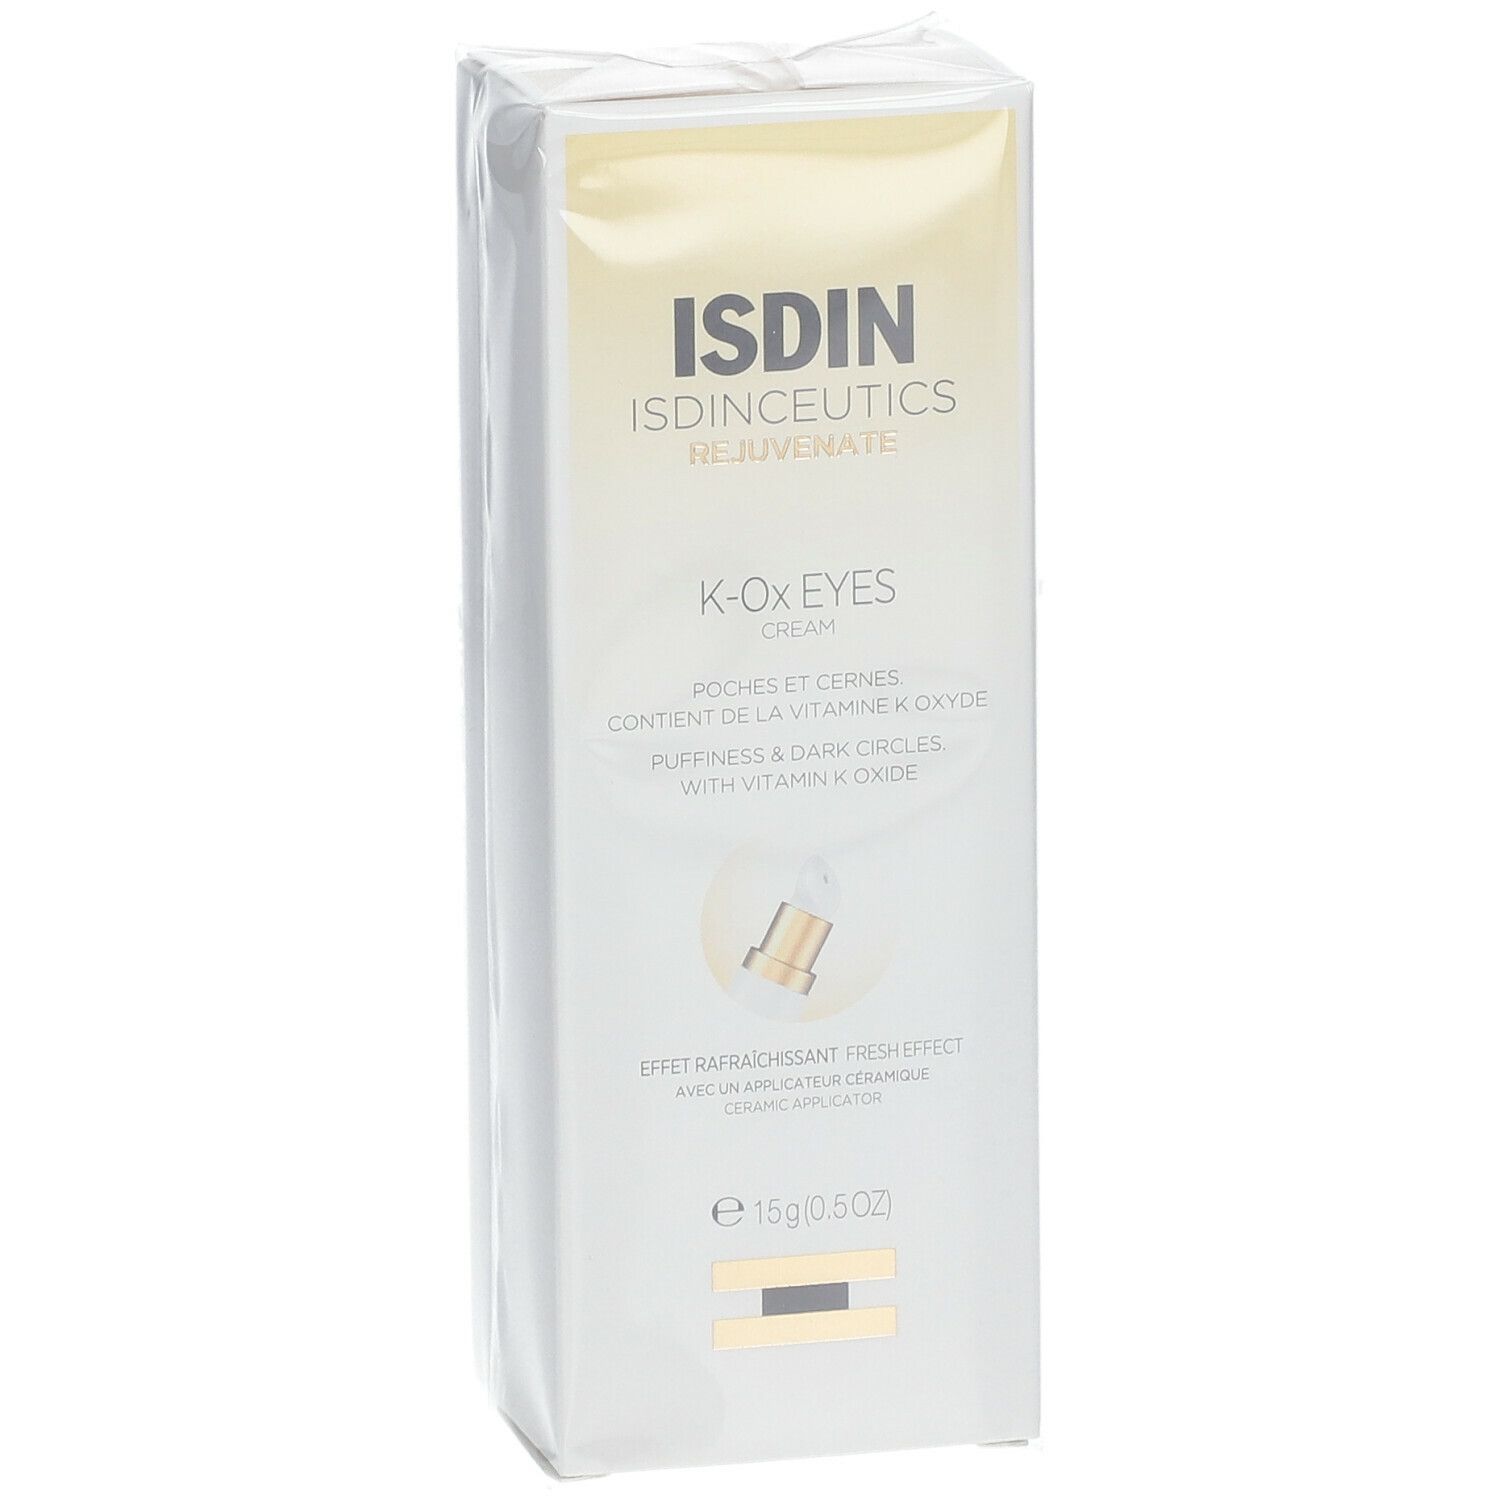 ISDIN® Isdinceutics K-Ox Eyes